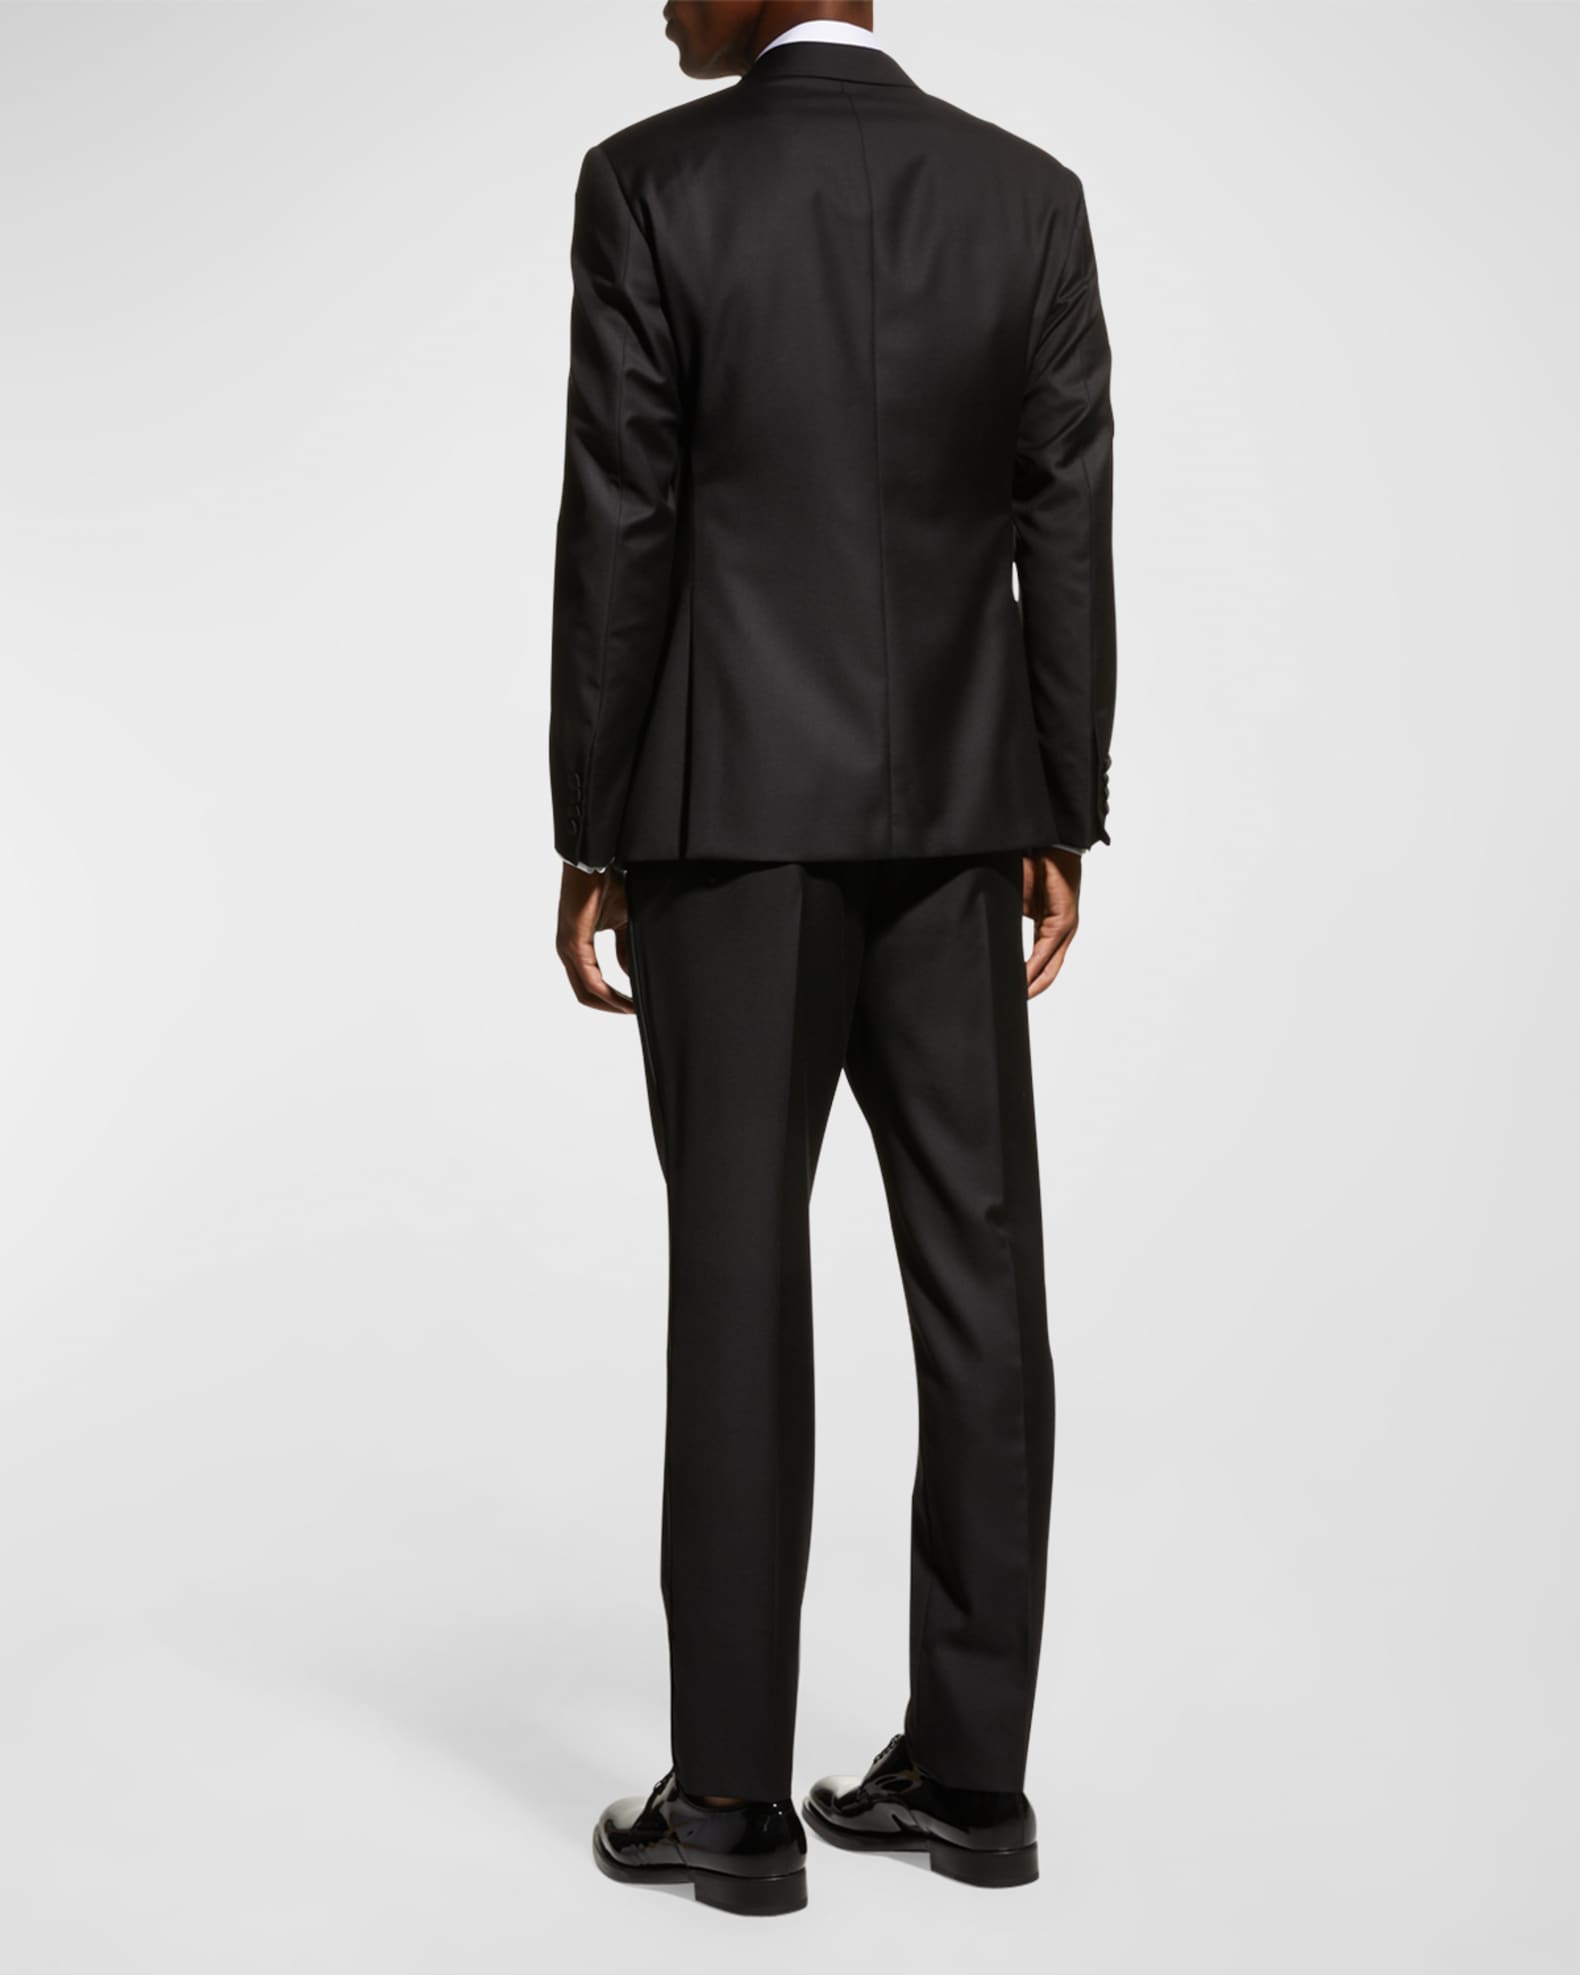 Emporio Armani Super 130s Wool Two-Piece Tuxedo | Neiman Marcus